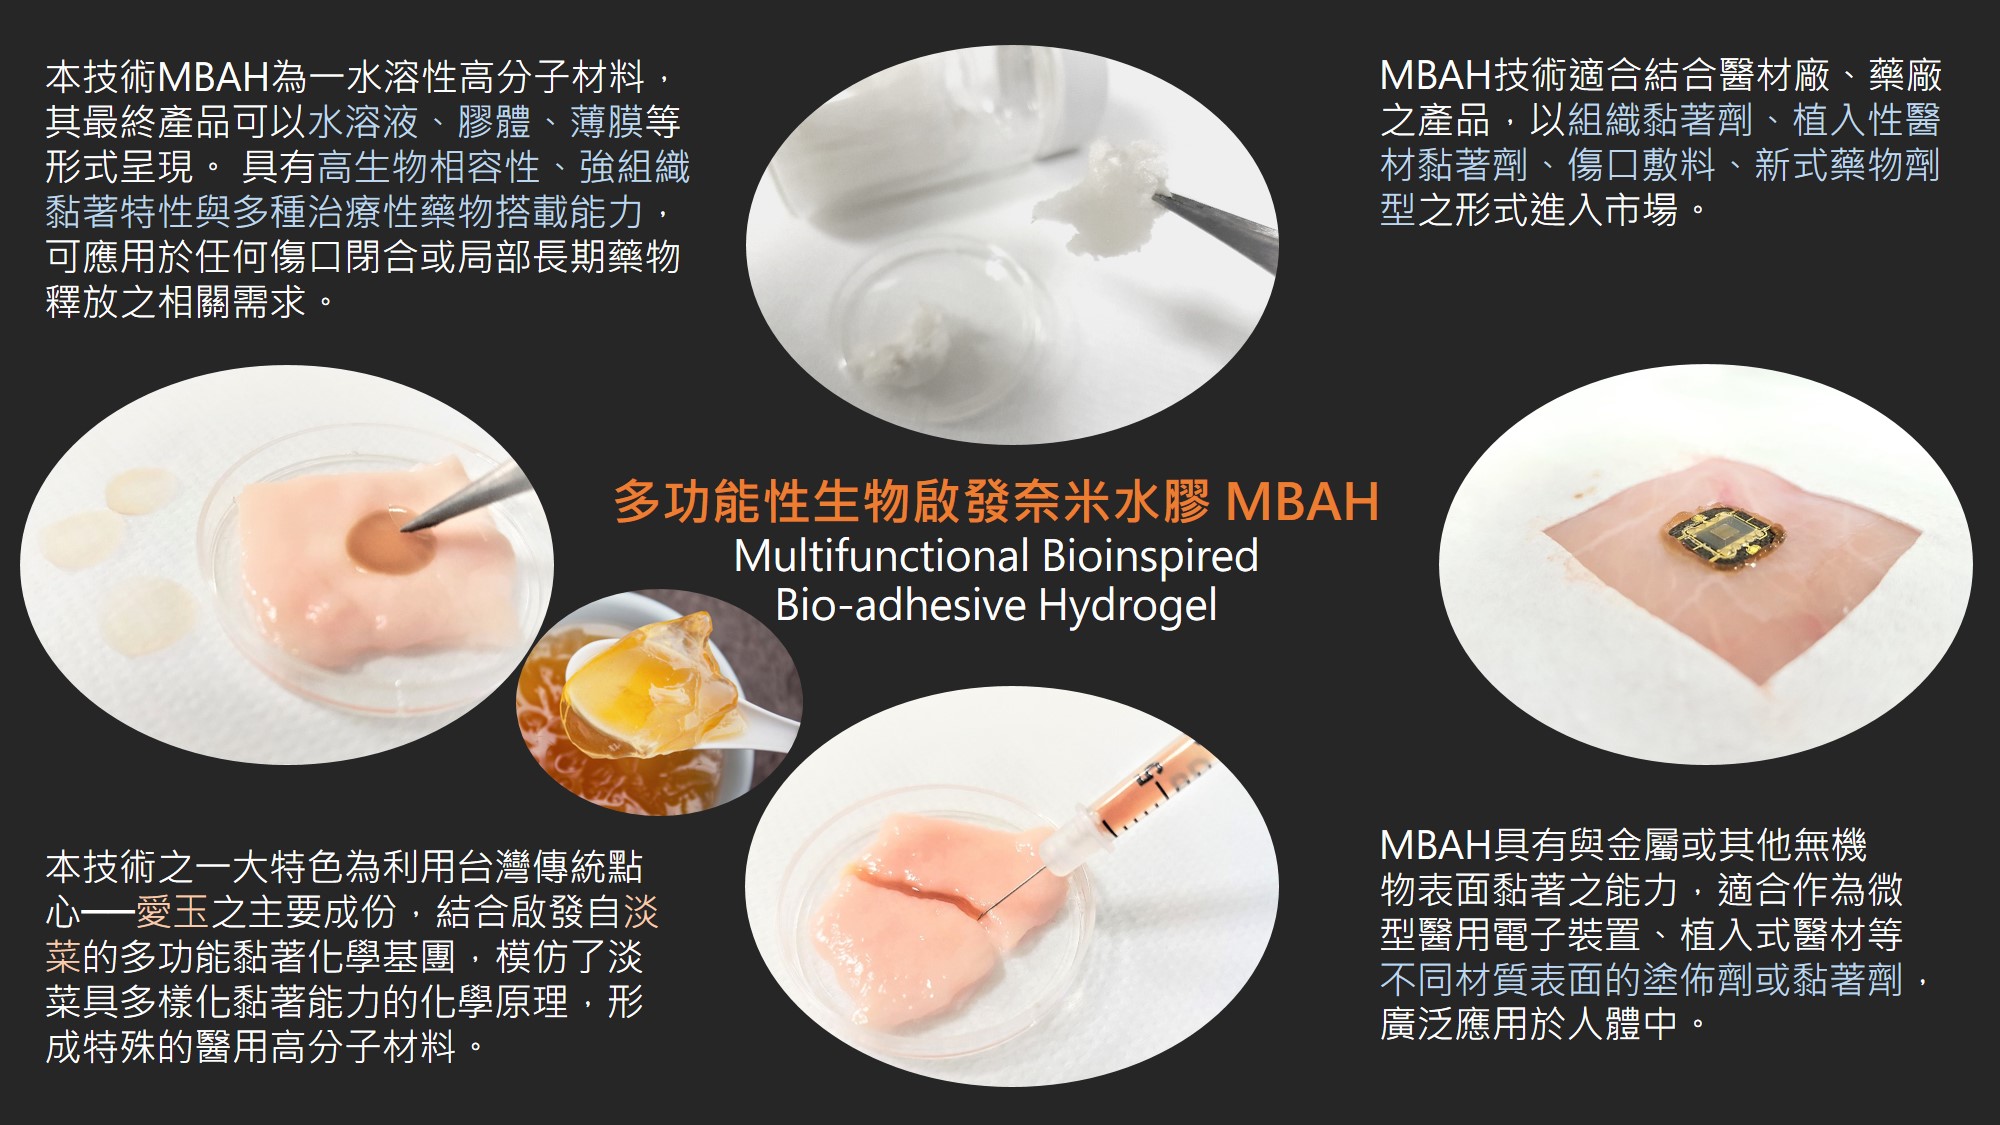 Multifunctional Bioinspired Bio-adhesive Hydrogel, MBAH